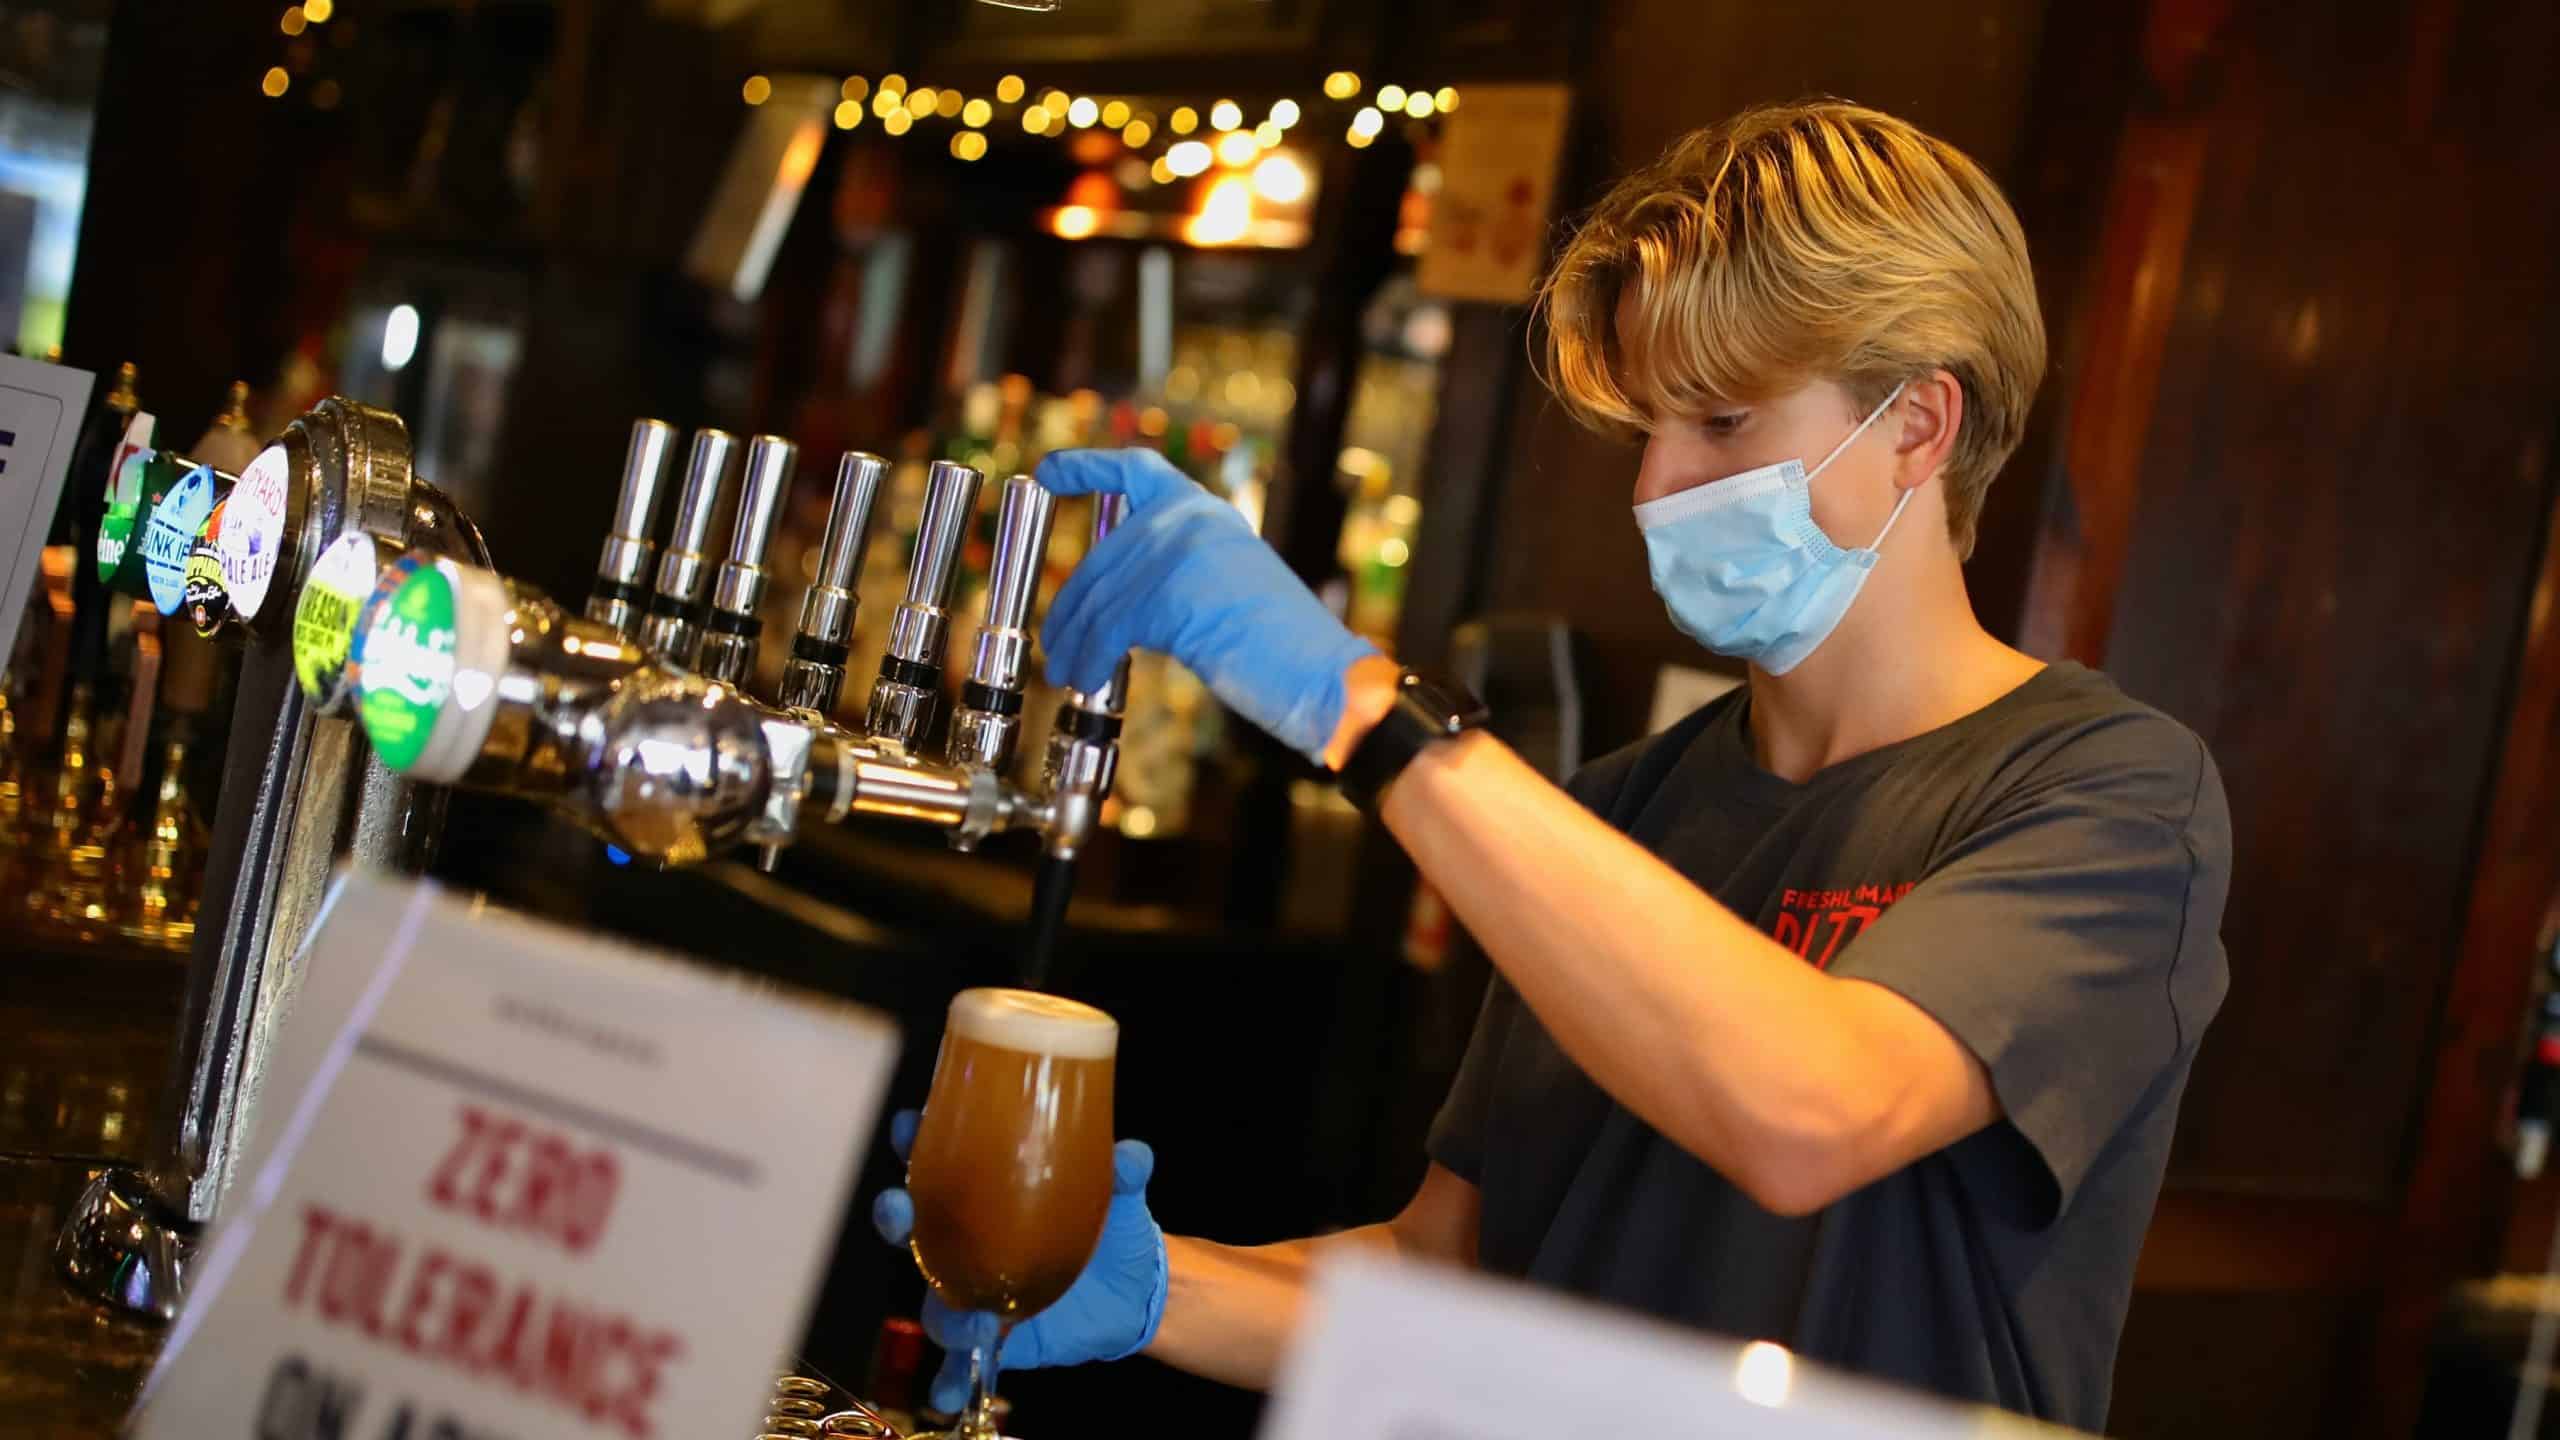 South London pub receives 484 applications for 2 bar jobs